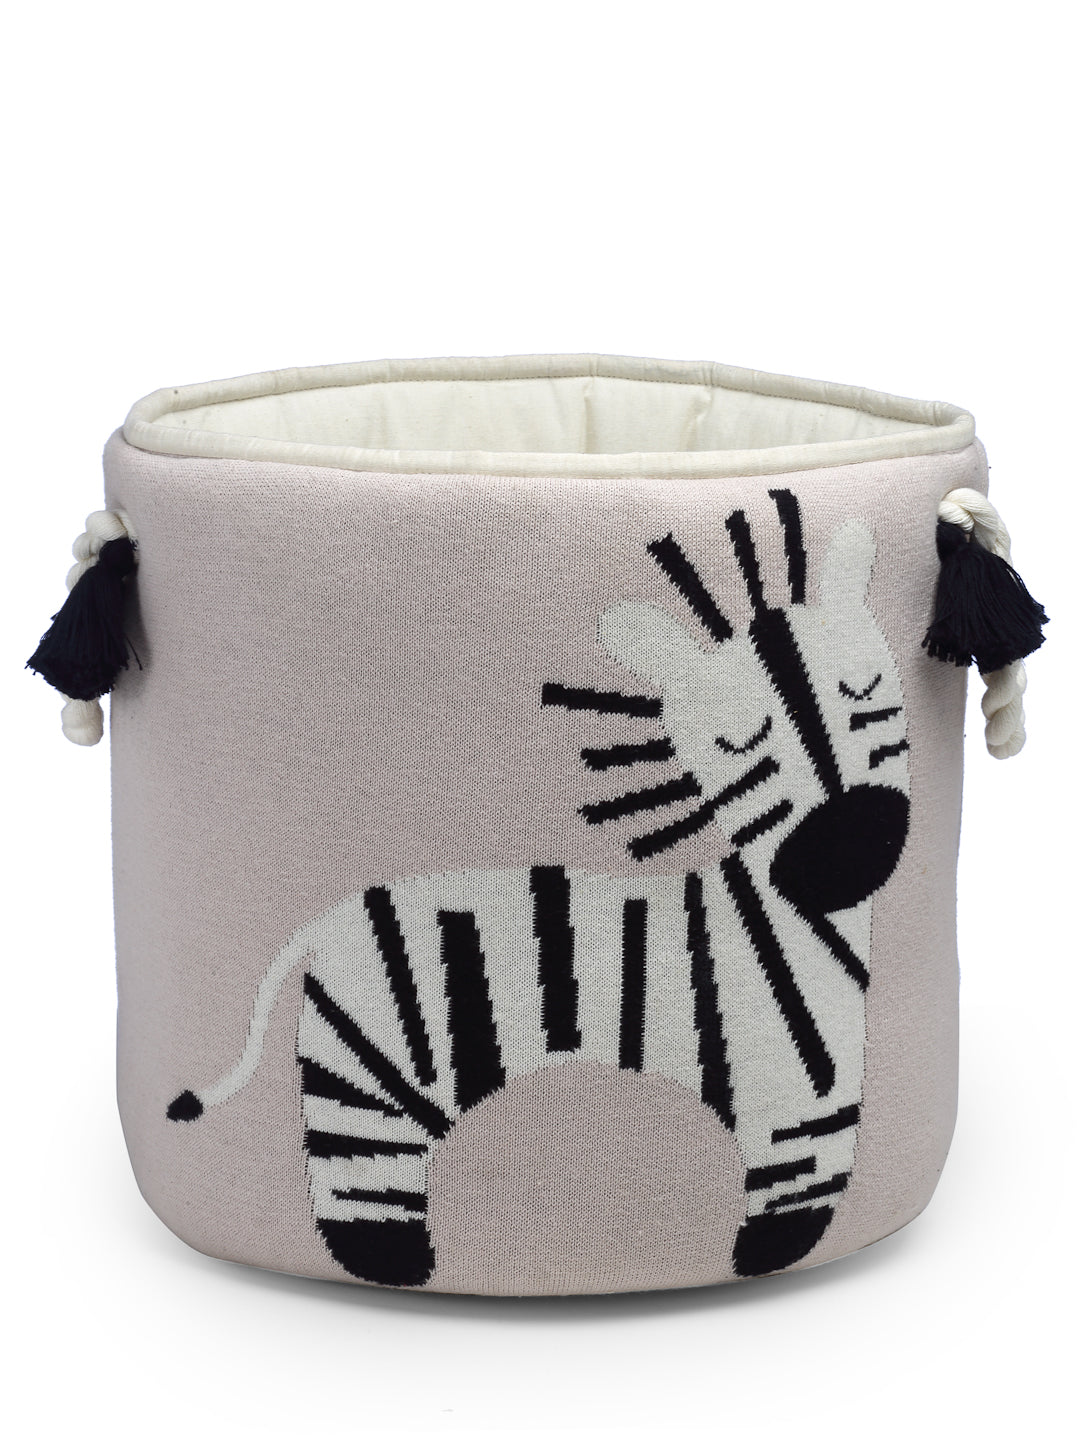 Zebra Knitted basket